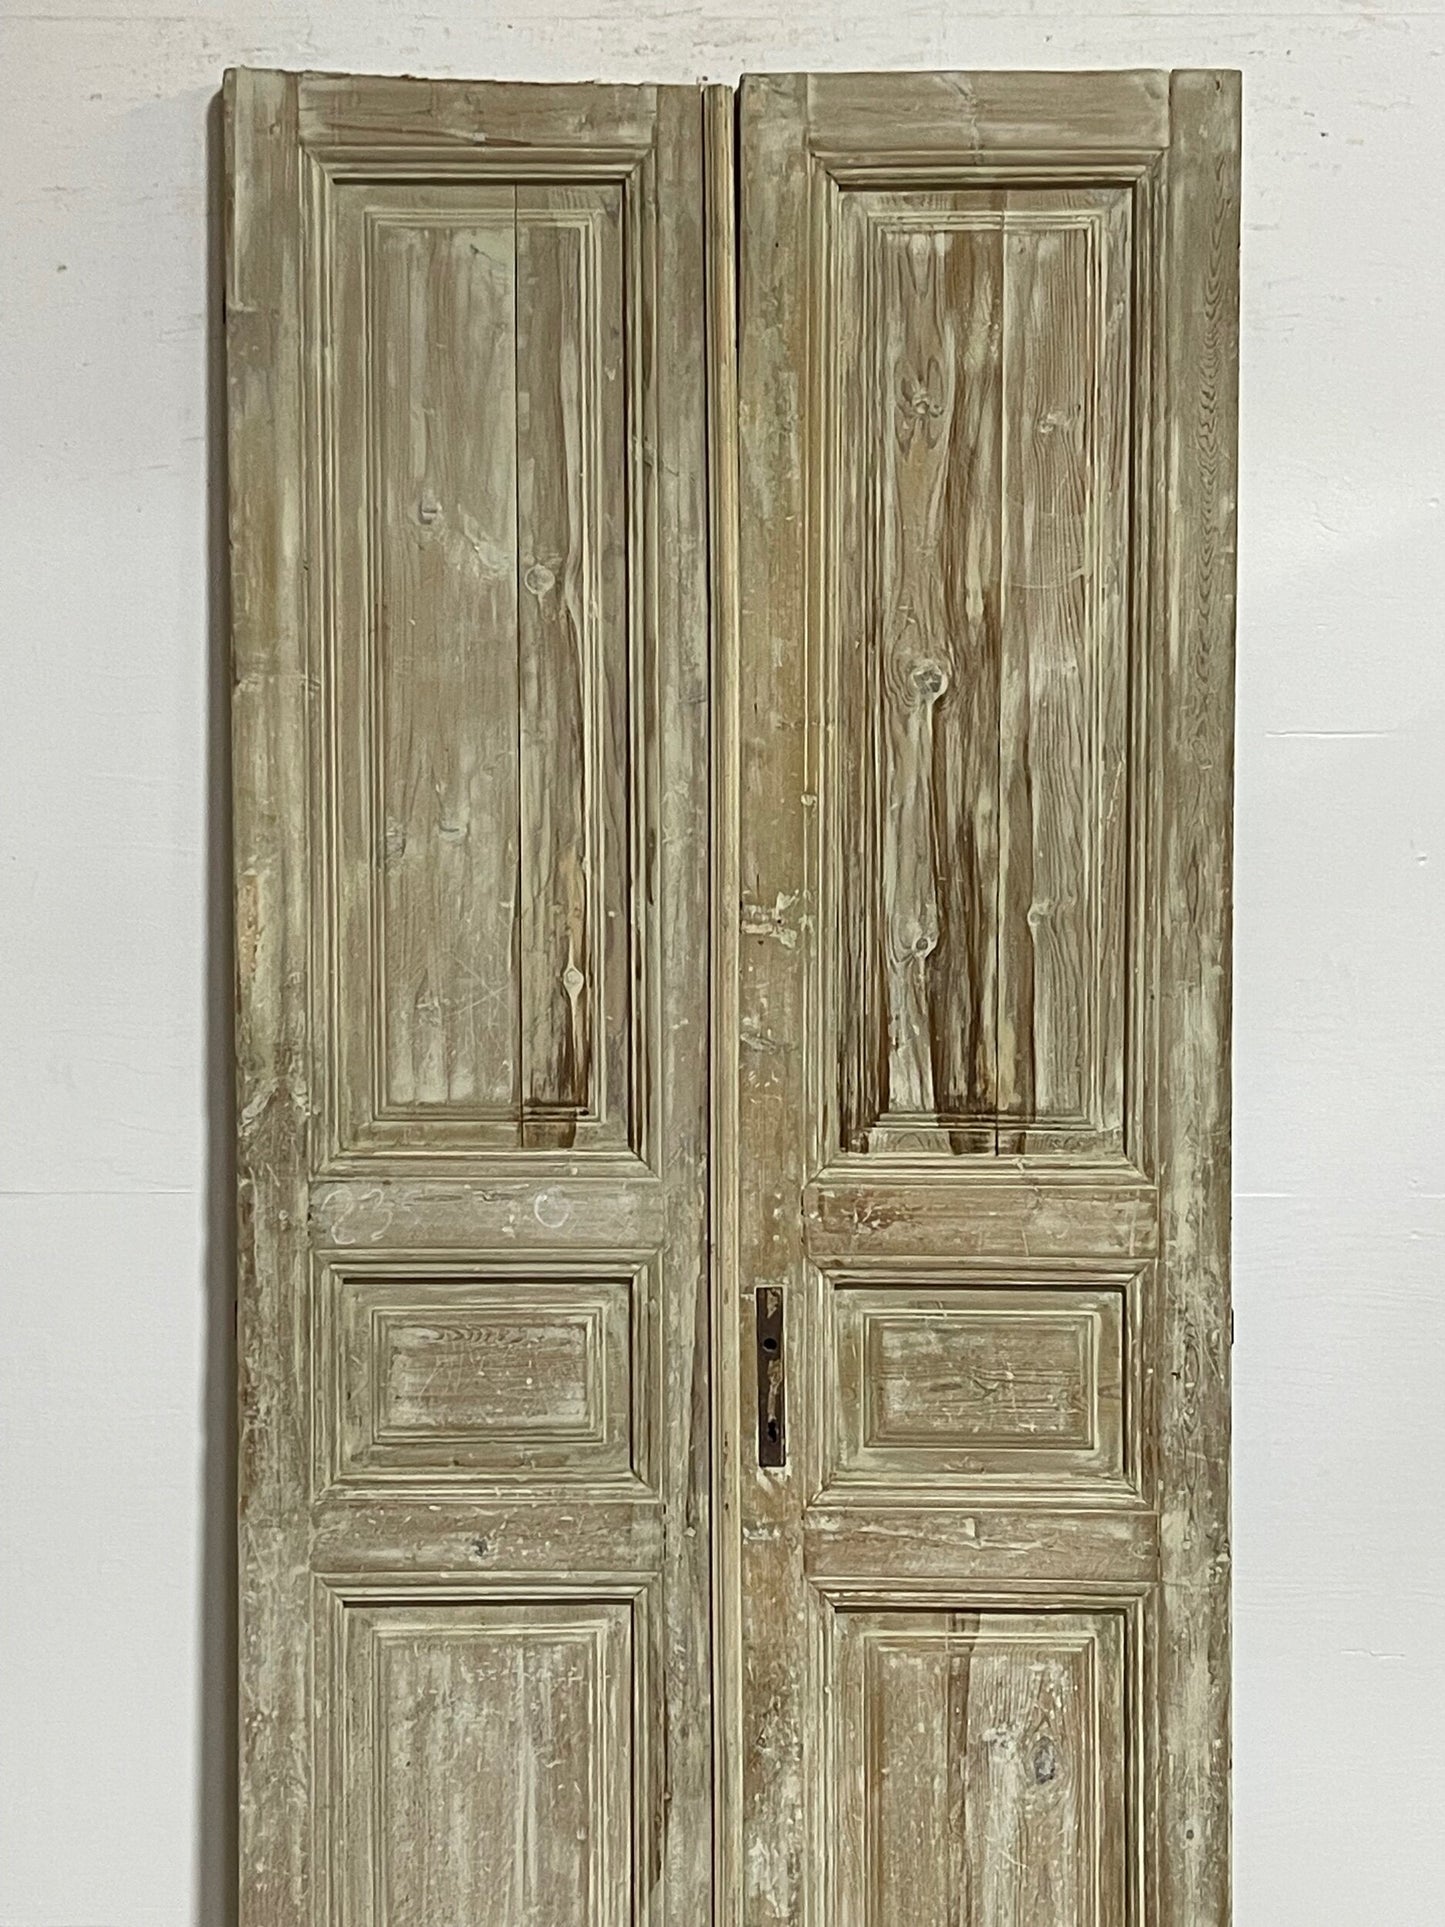 Antique French doors (93.5x40.5) H0156s